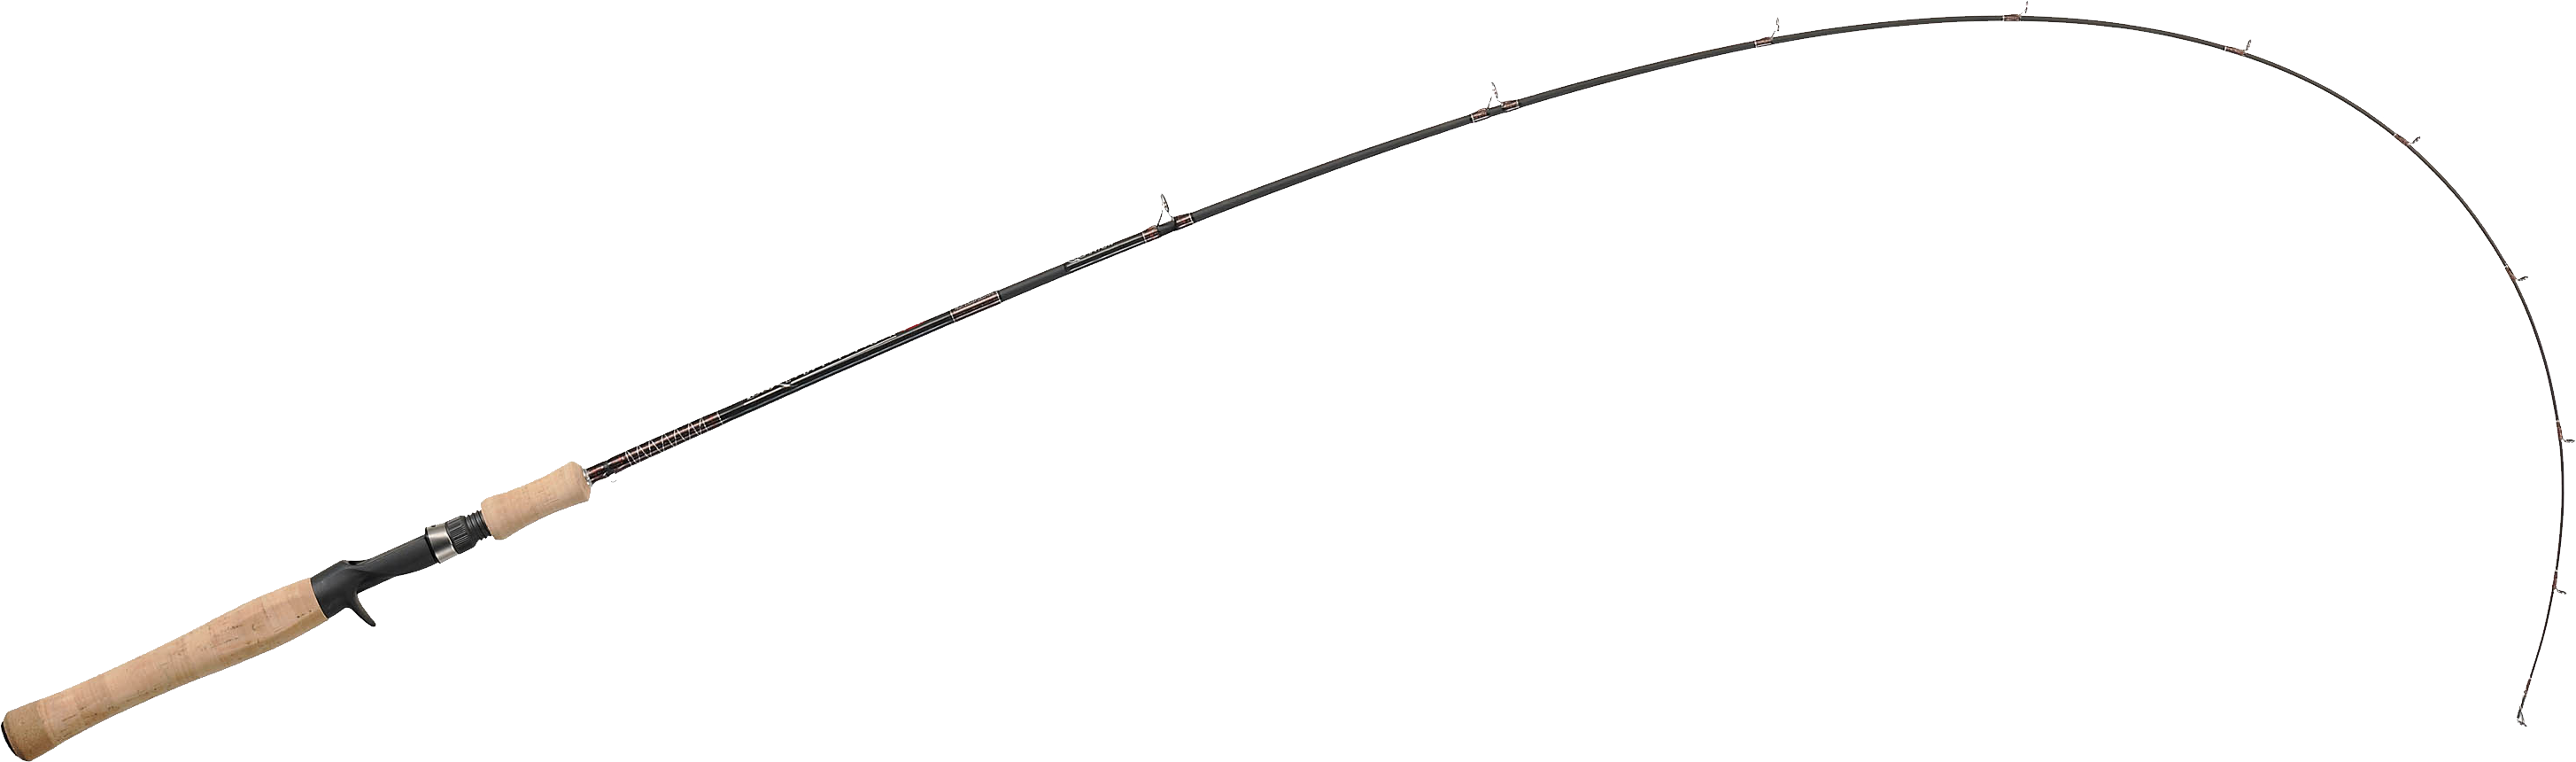 Similar Fishing Pole PNG Imag